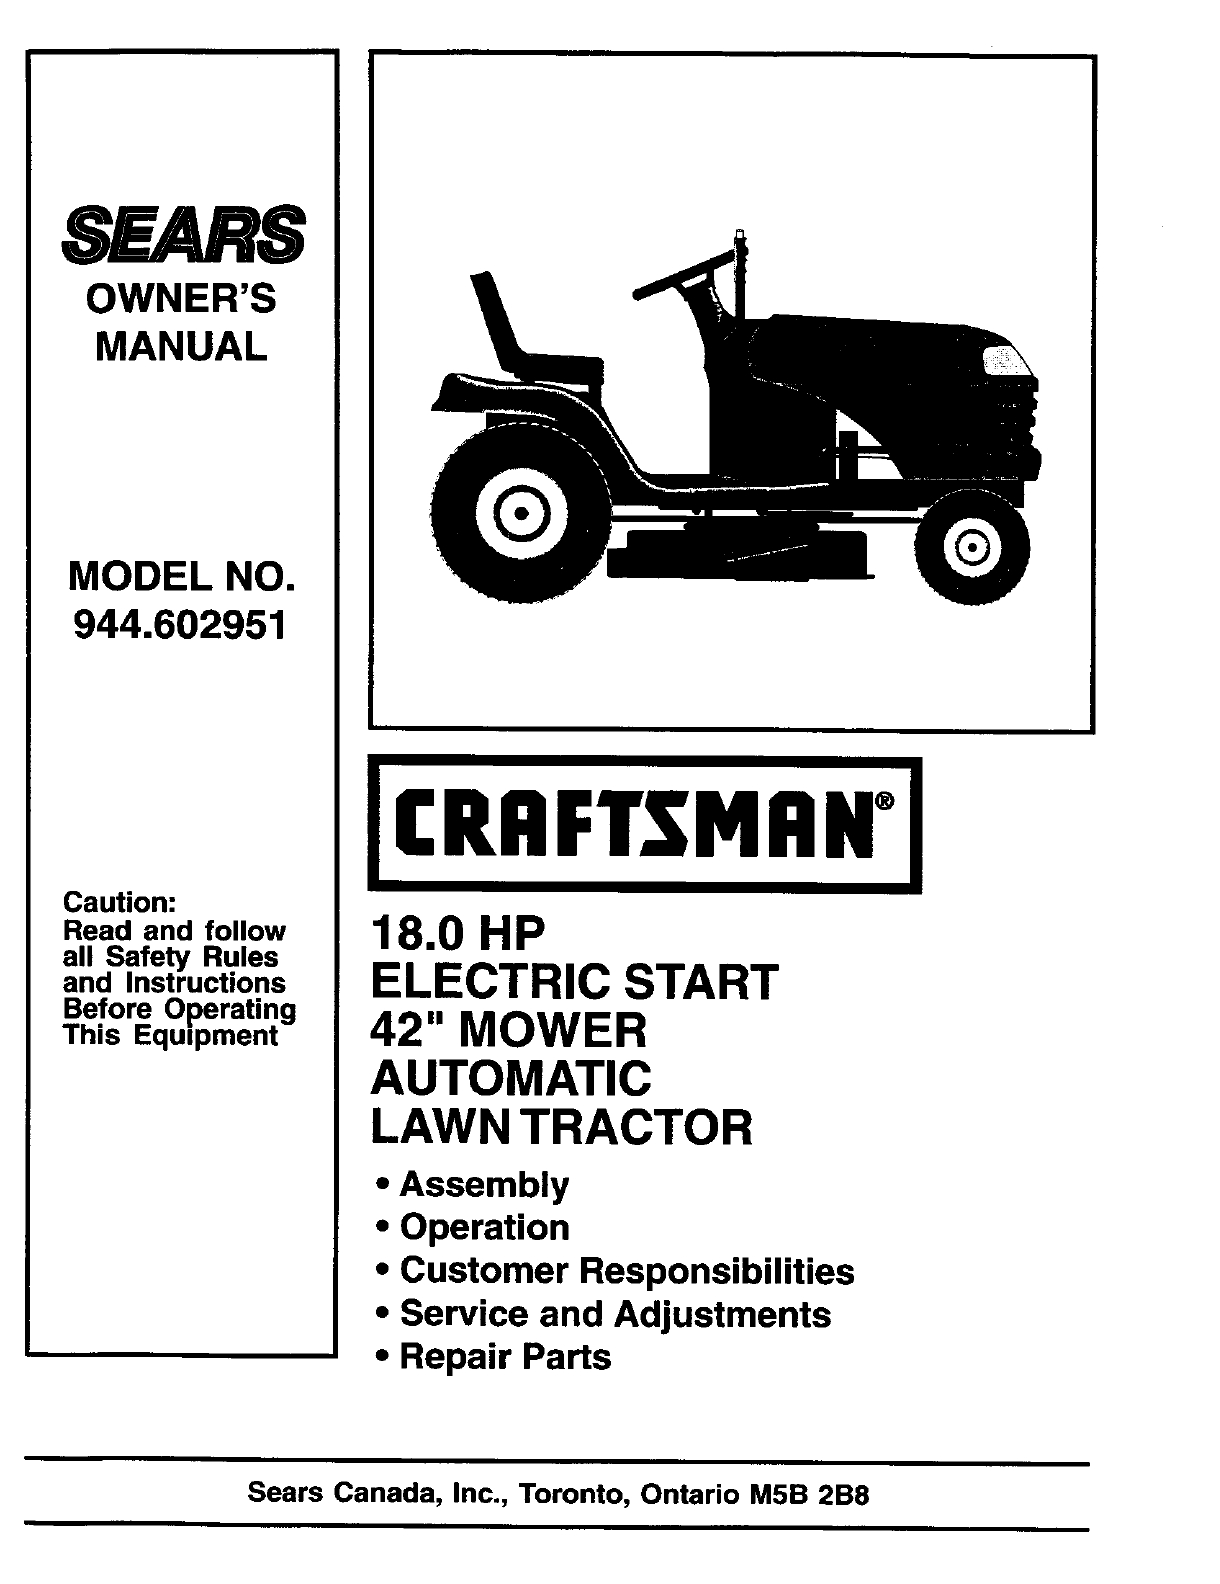 Craftsman lawn tractor 917.288516 user manual free